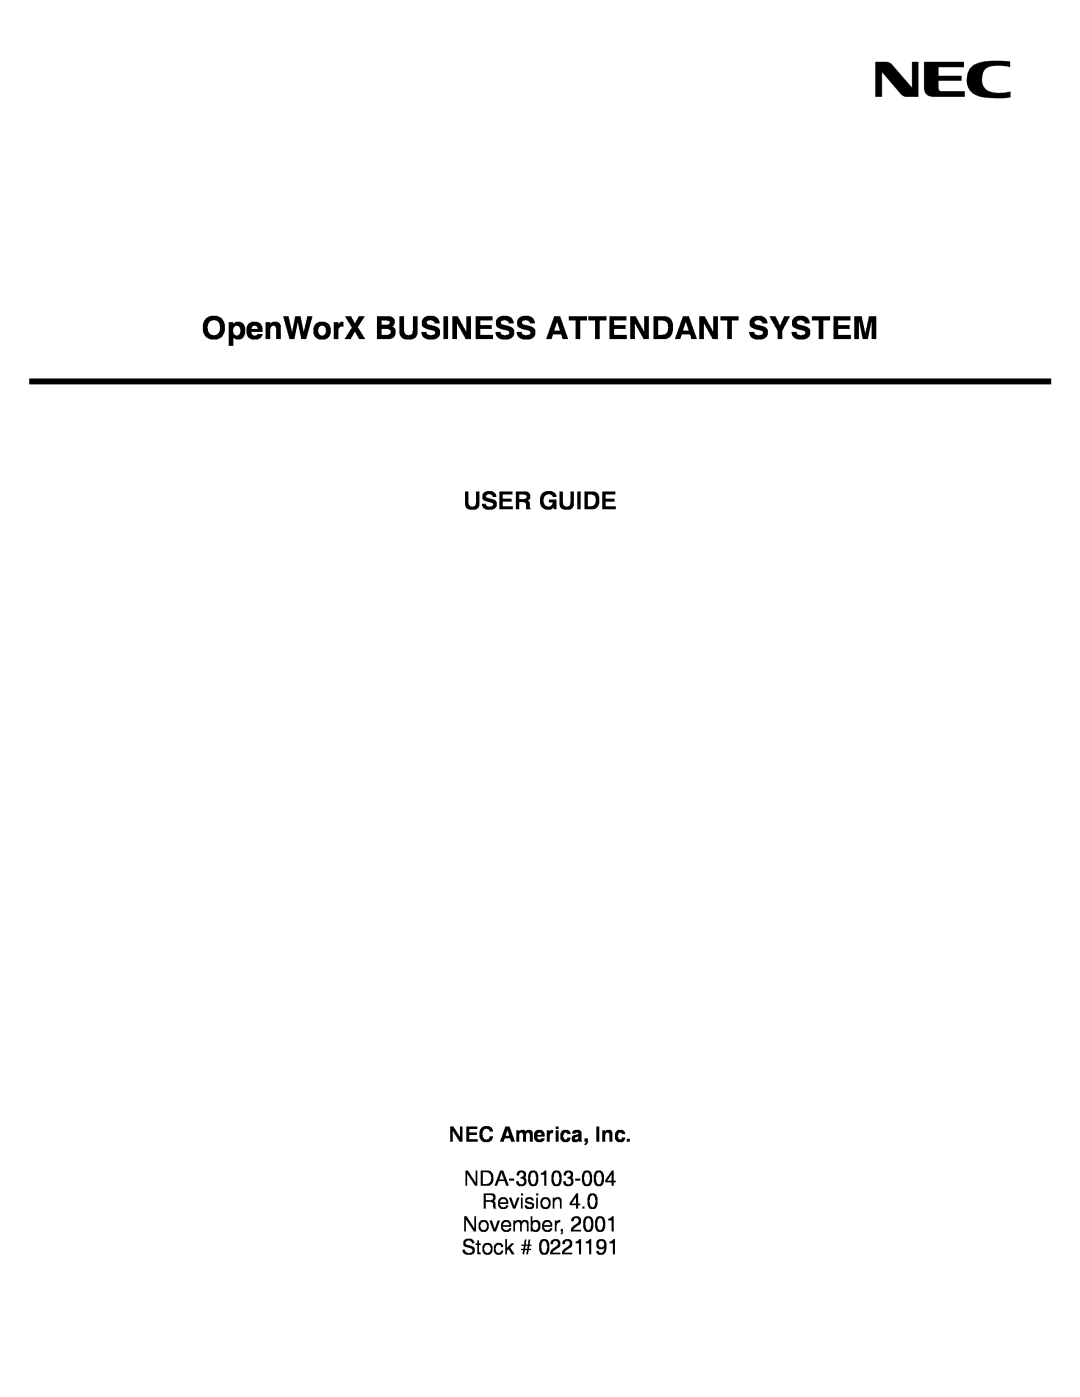 NEC NDA-30103-004 manual User Guide, NEC America, Inc, OpenWorX BUSINESS ATTENDANT SYSTEM 